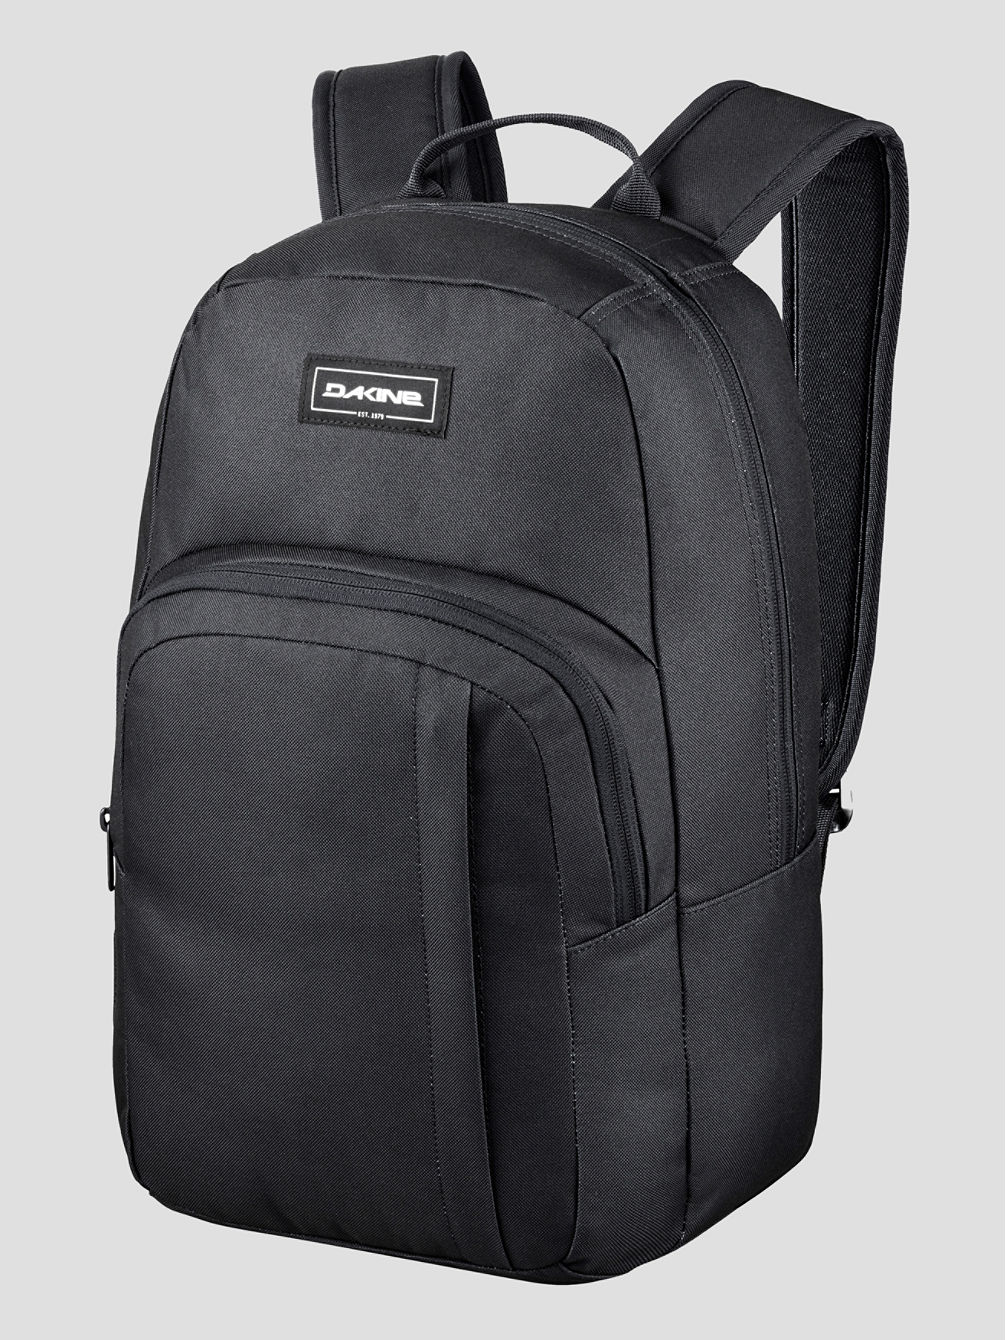 Class 25L Backpack